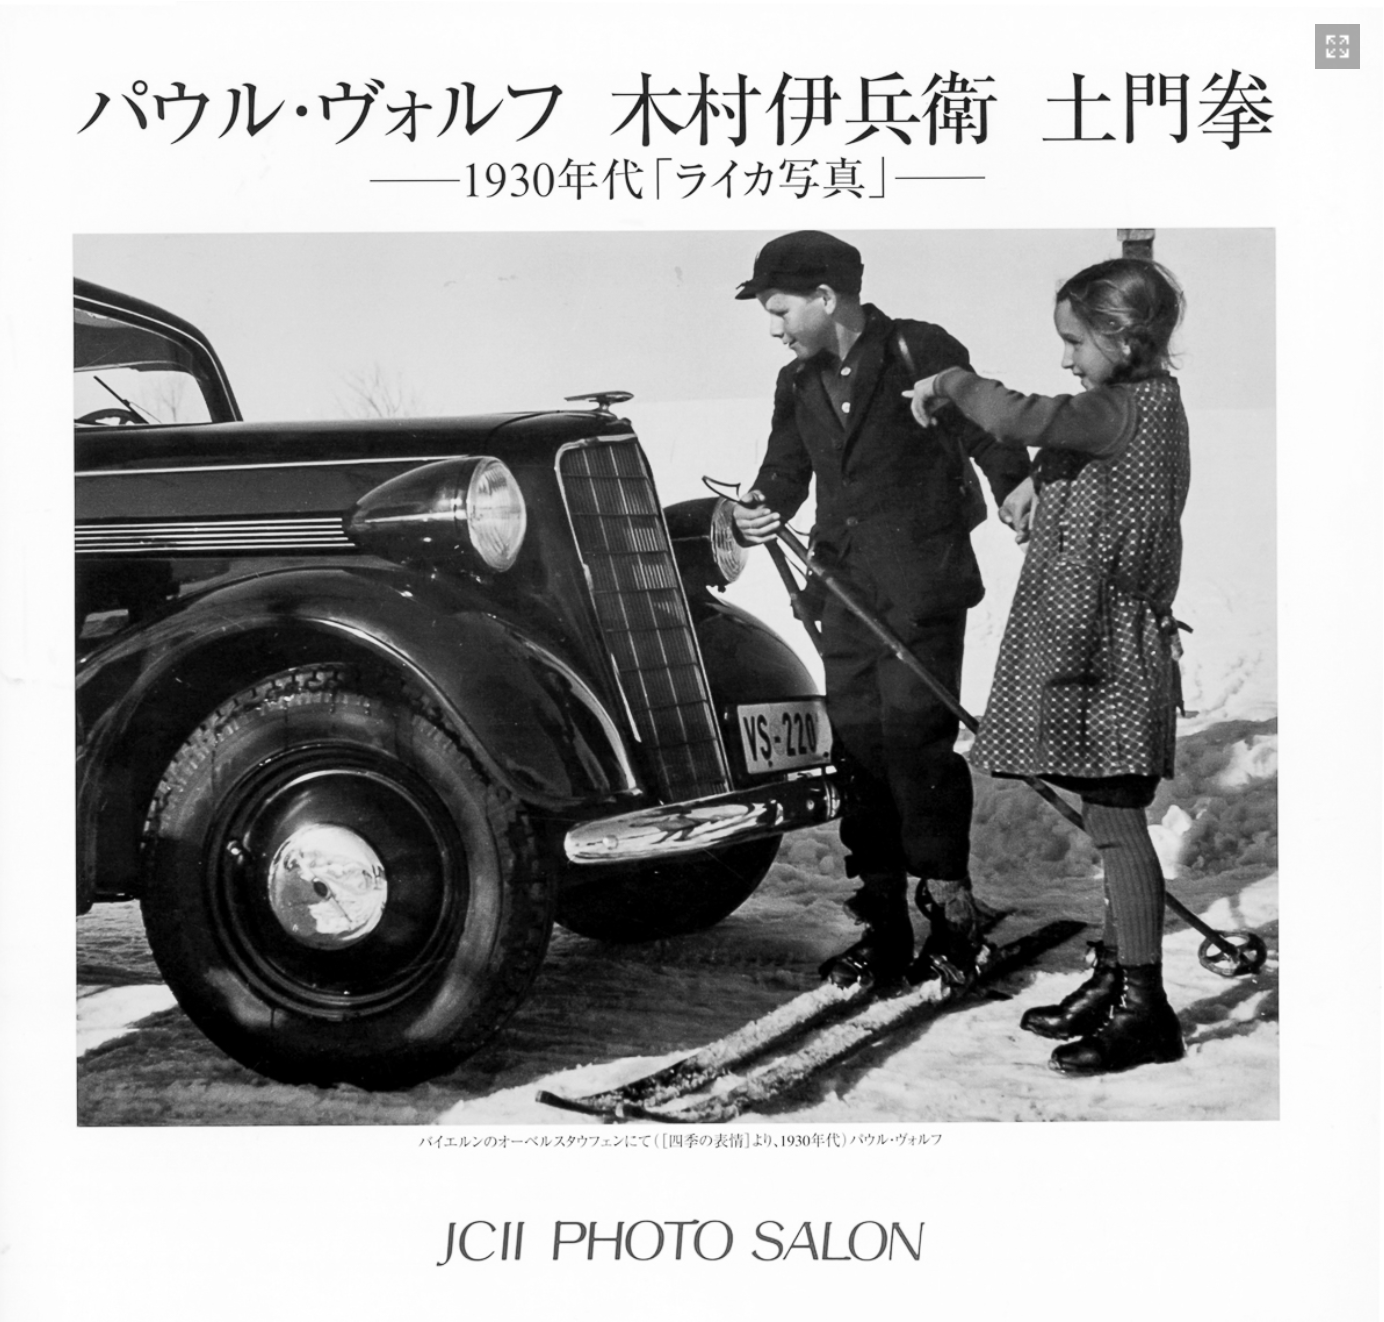 The Cover of the 2008 JCII Photo Salon catalogue: “1930’s Leica Photographs”